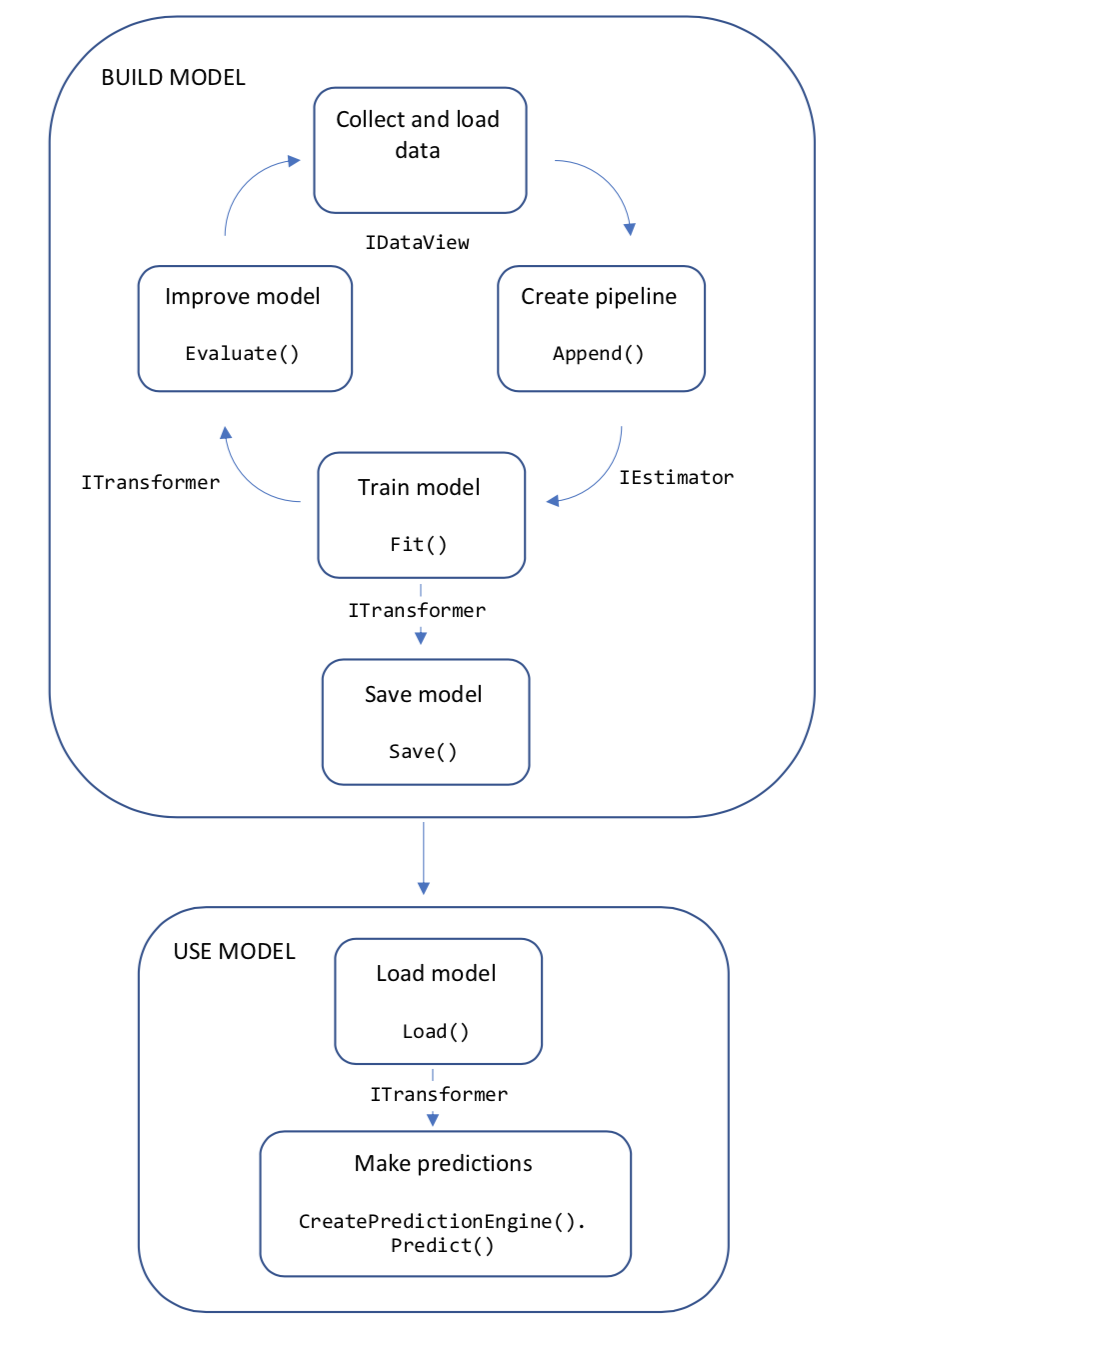 ML.NET application development flow including components for data generation, pipeline development, model training, model evaluation, and model usage